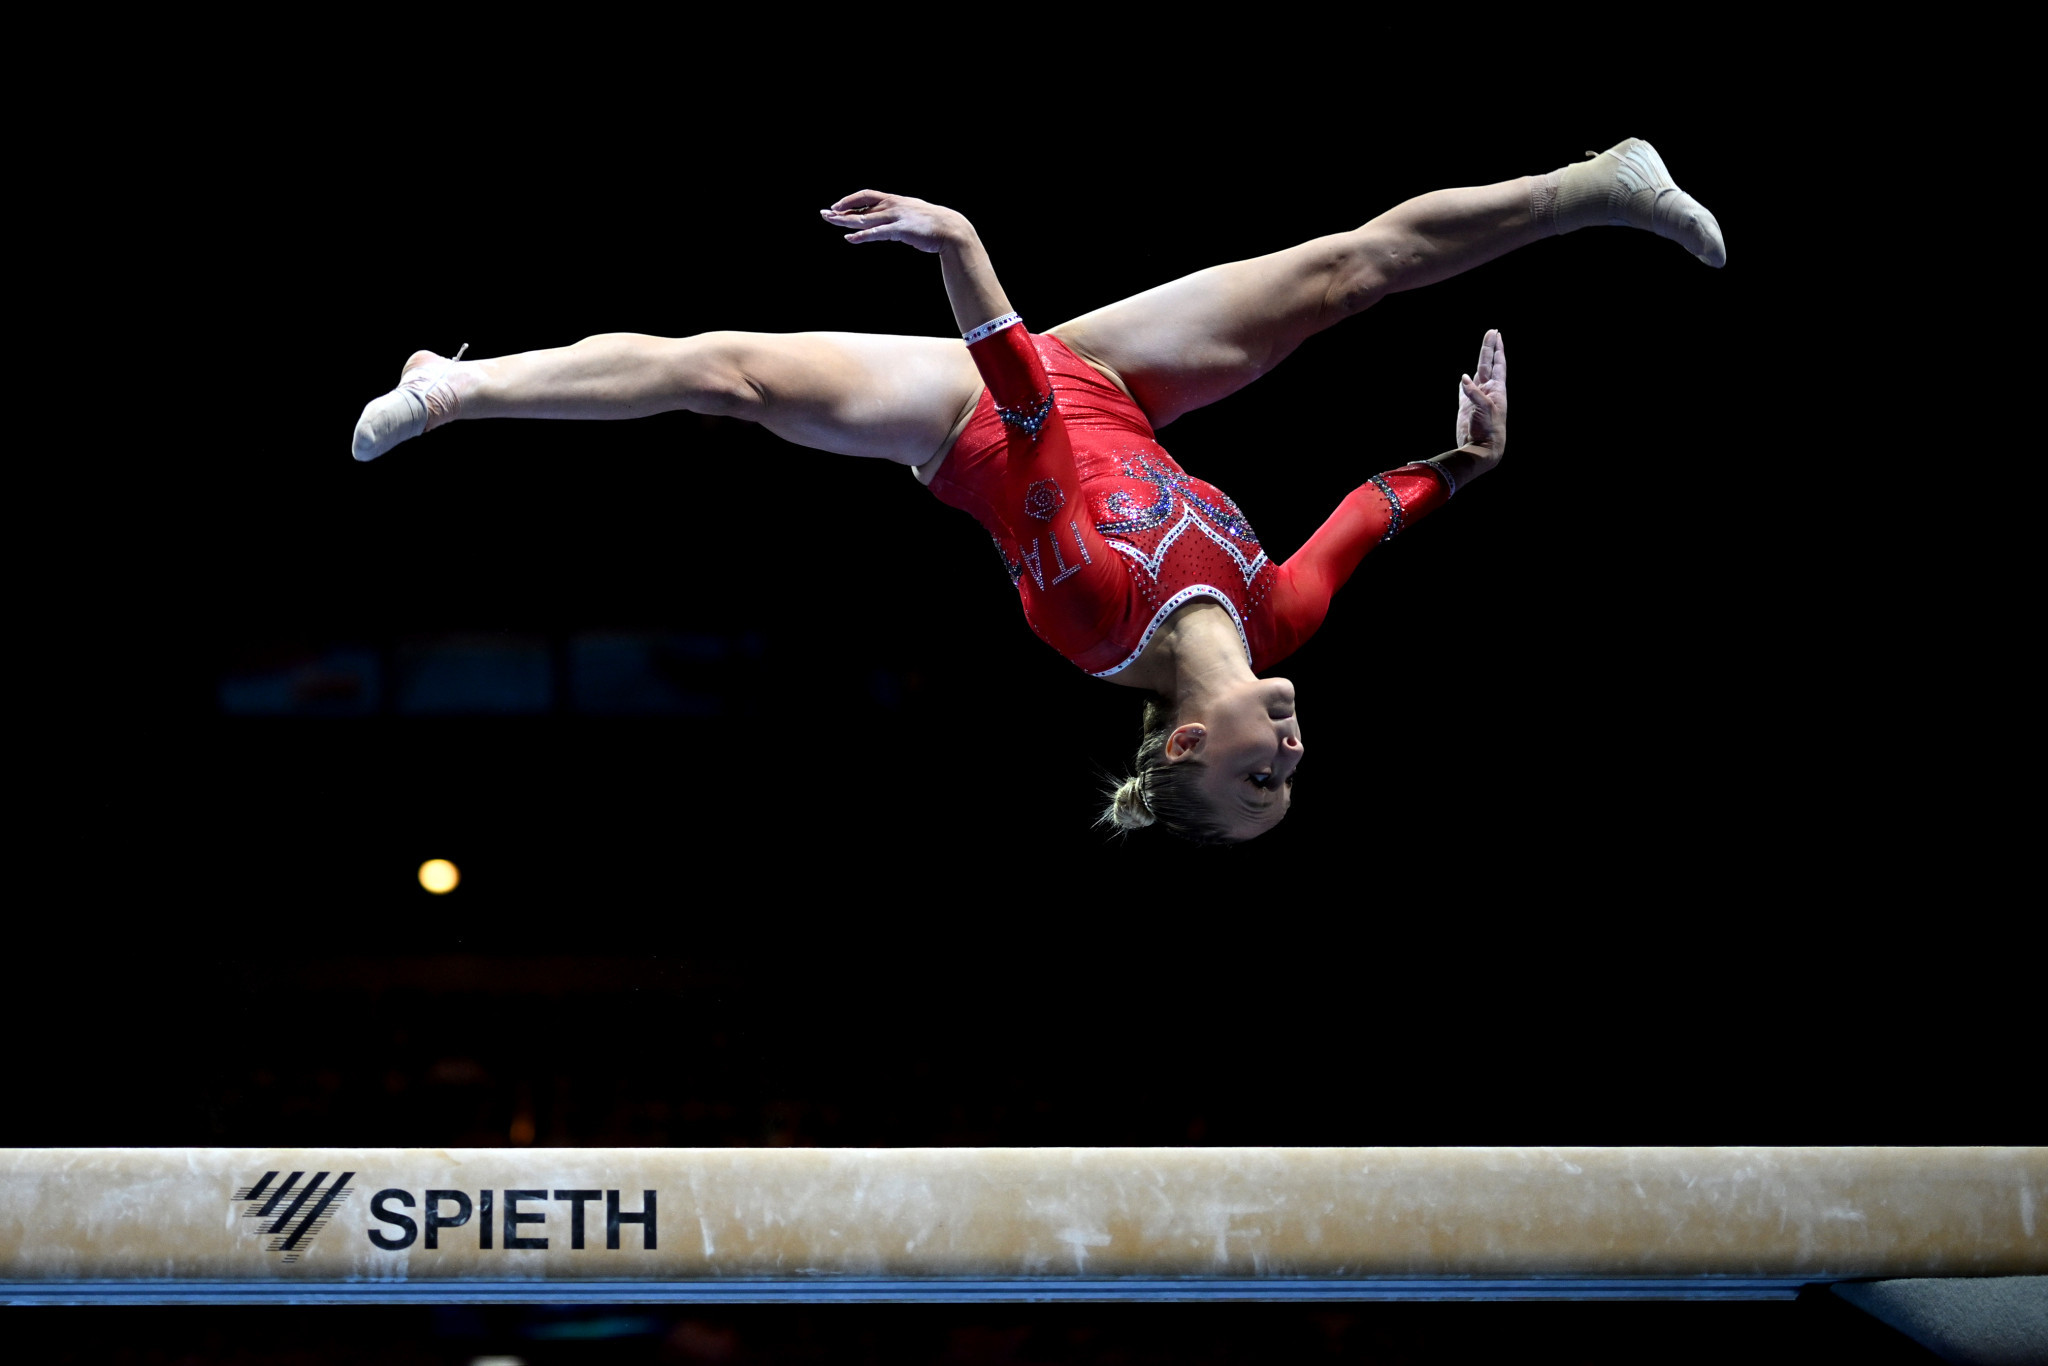 Italy's Martina Maggio won bronze in artistic gymnastics ©Getty Images